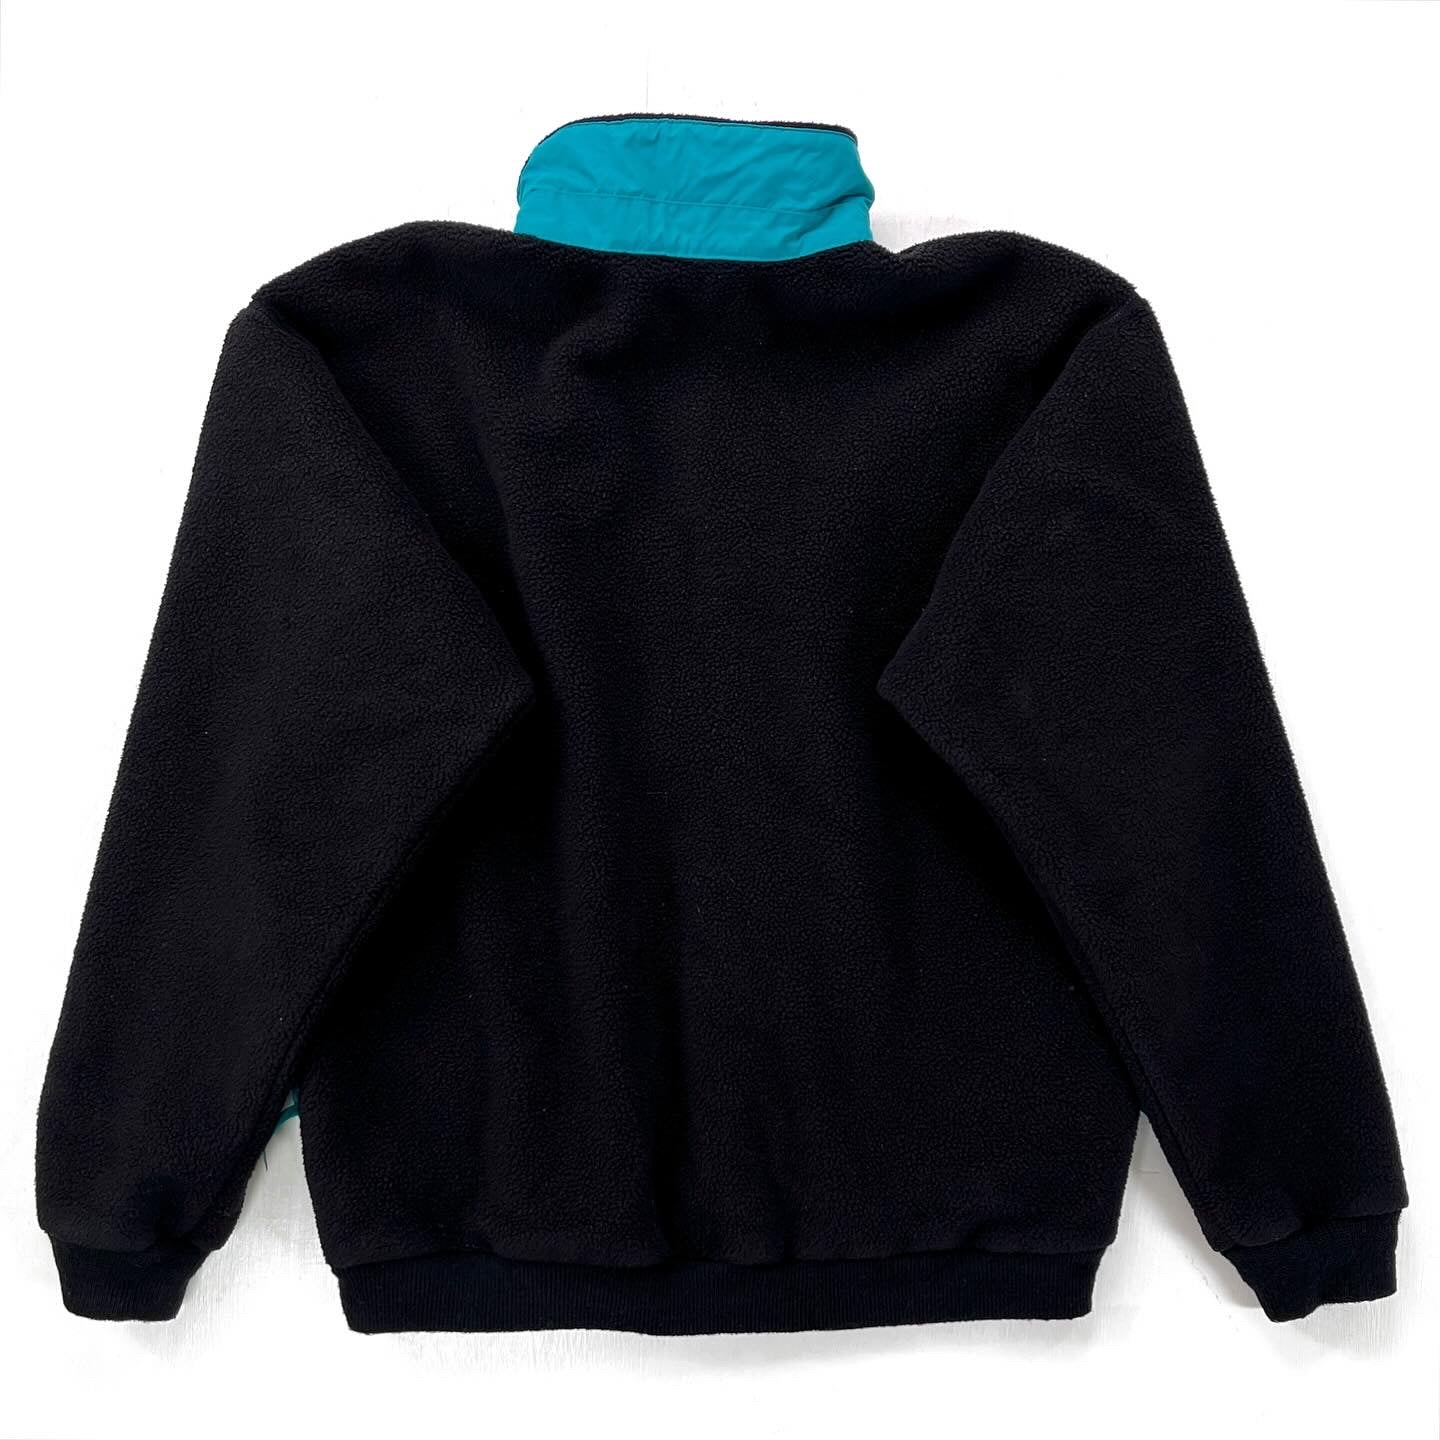 1988 Patagonia Heavy Synchilla Half-Zip Sweater, Black & Teal (M)